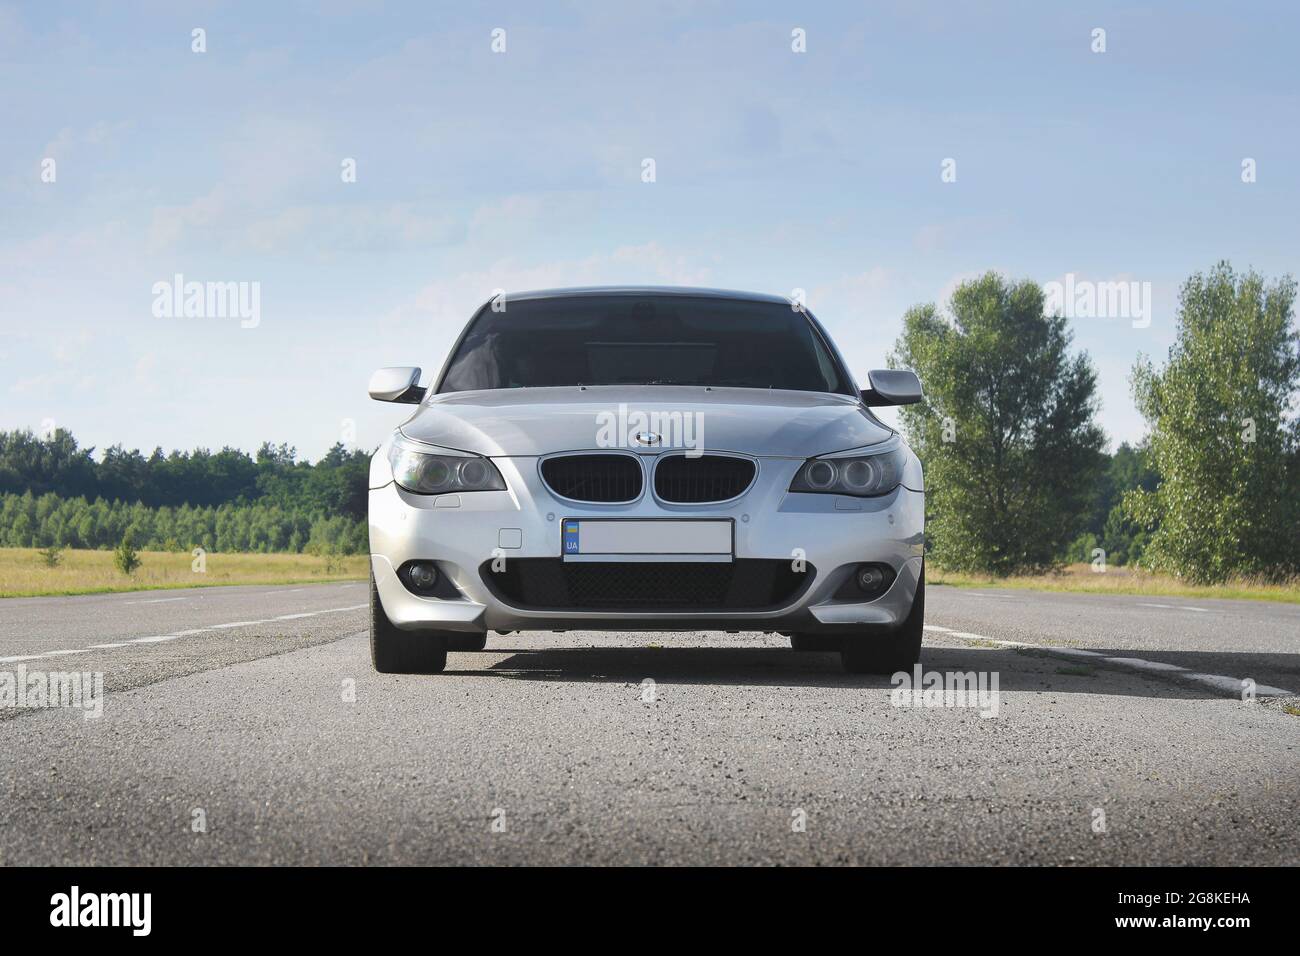 BMW E60 M5 2 Stock Photo - Alamy